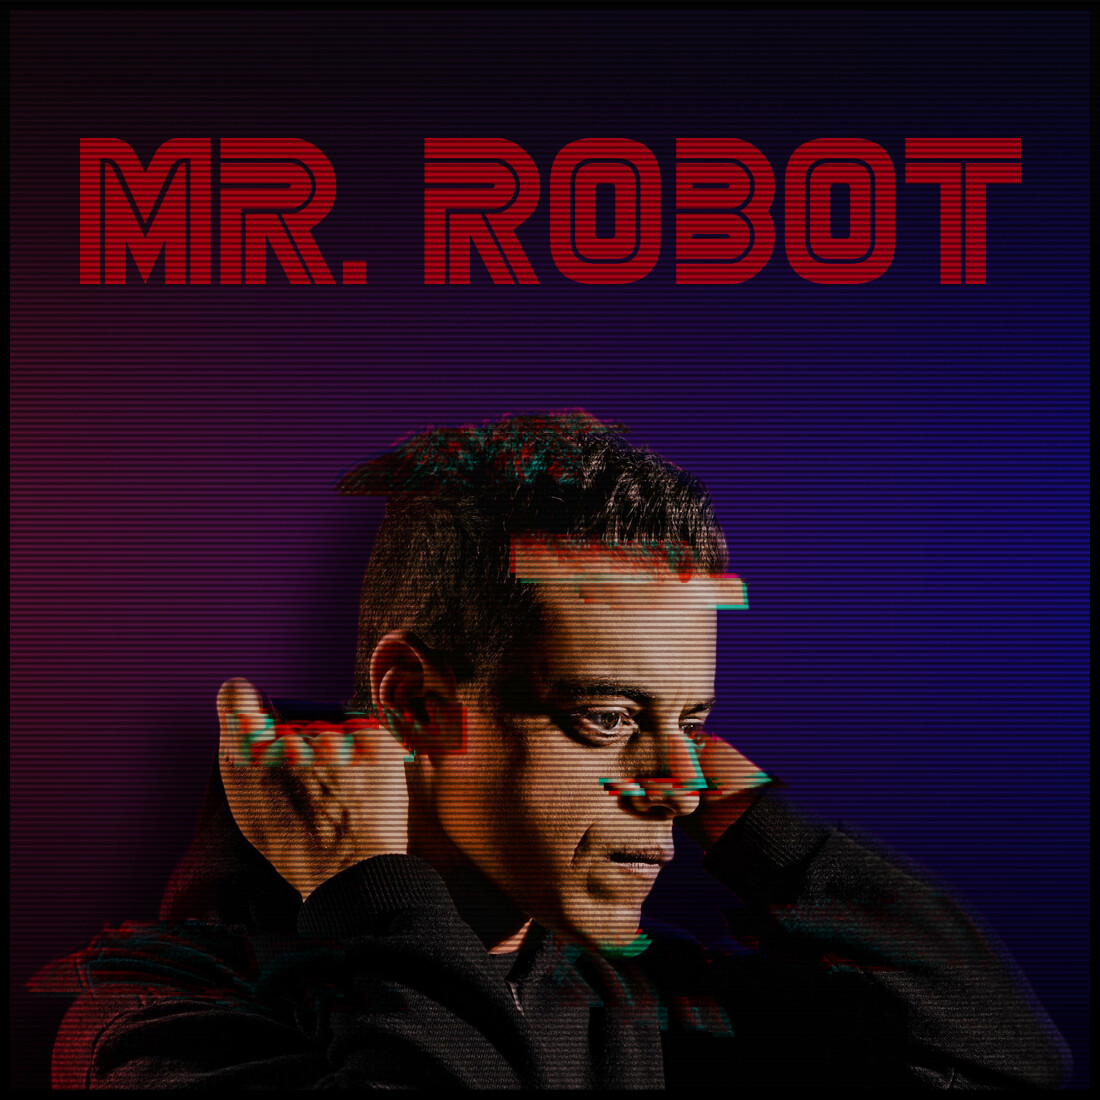 ArtStation - MR.ROBOT